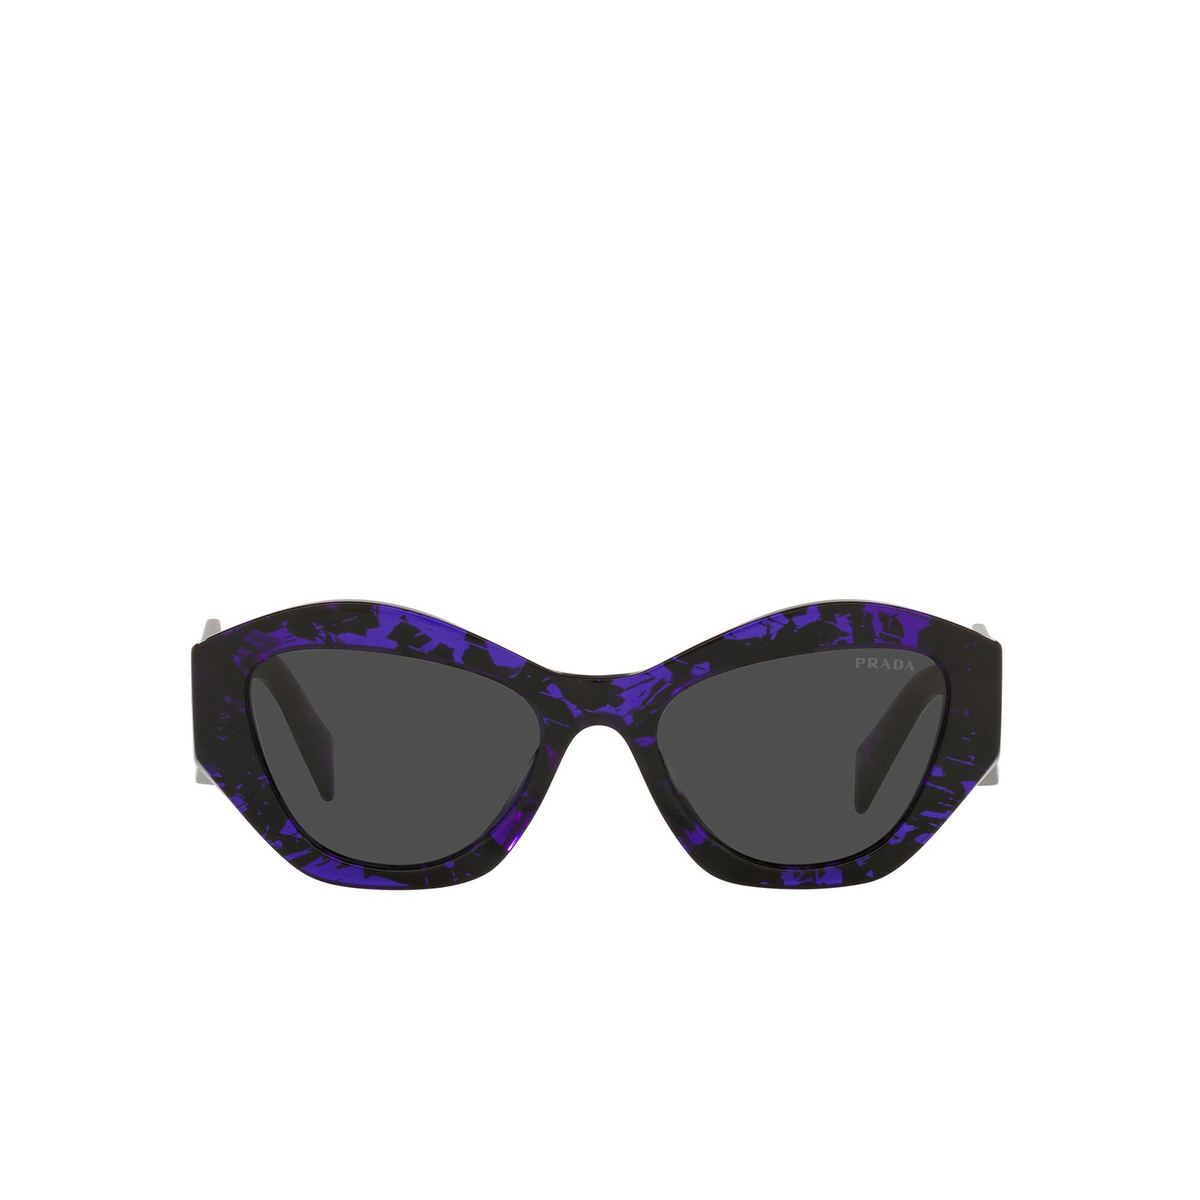 Prada® Irregular Sunglasses: PR 07YS color Abstract Purple 05V5S0 - front view.